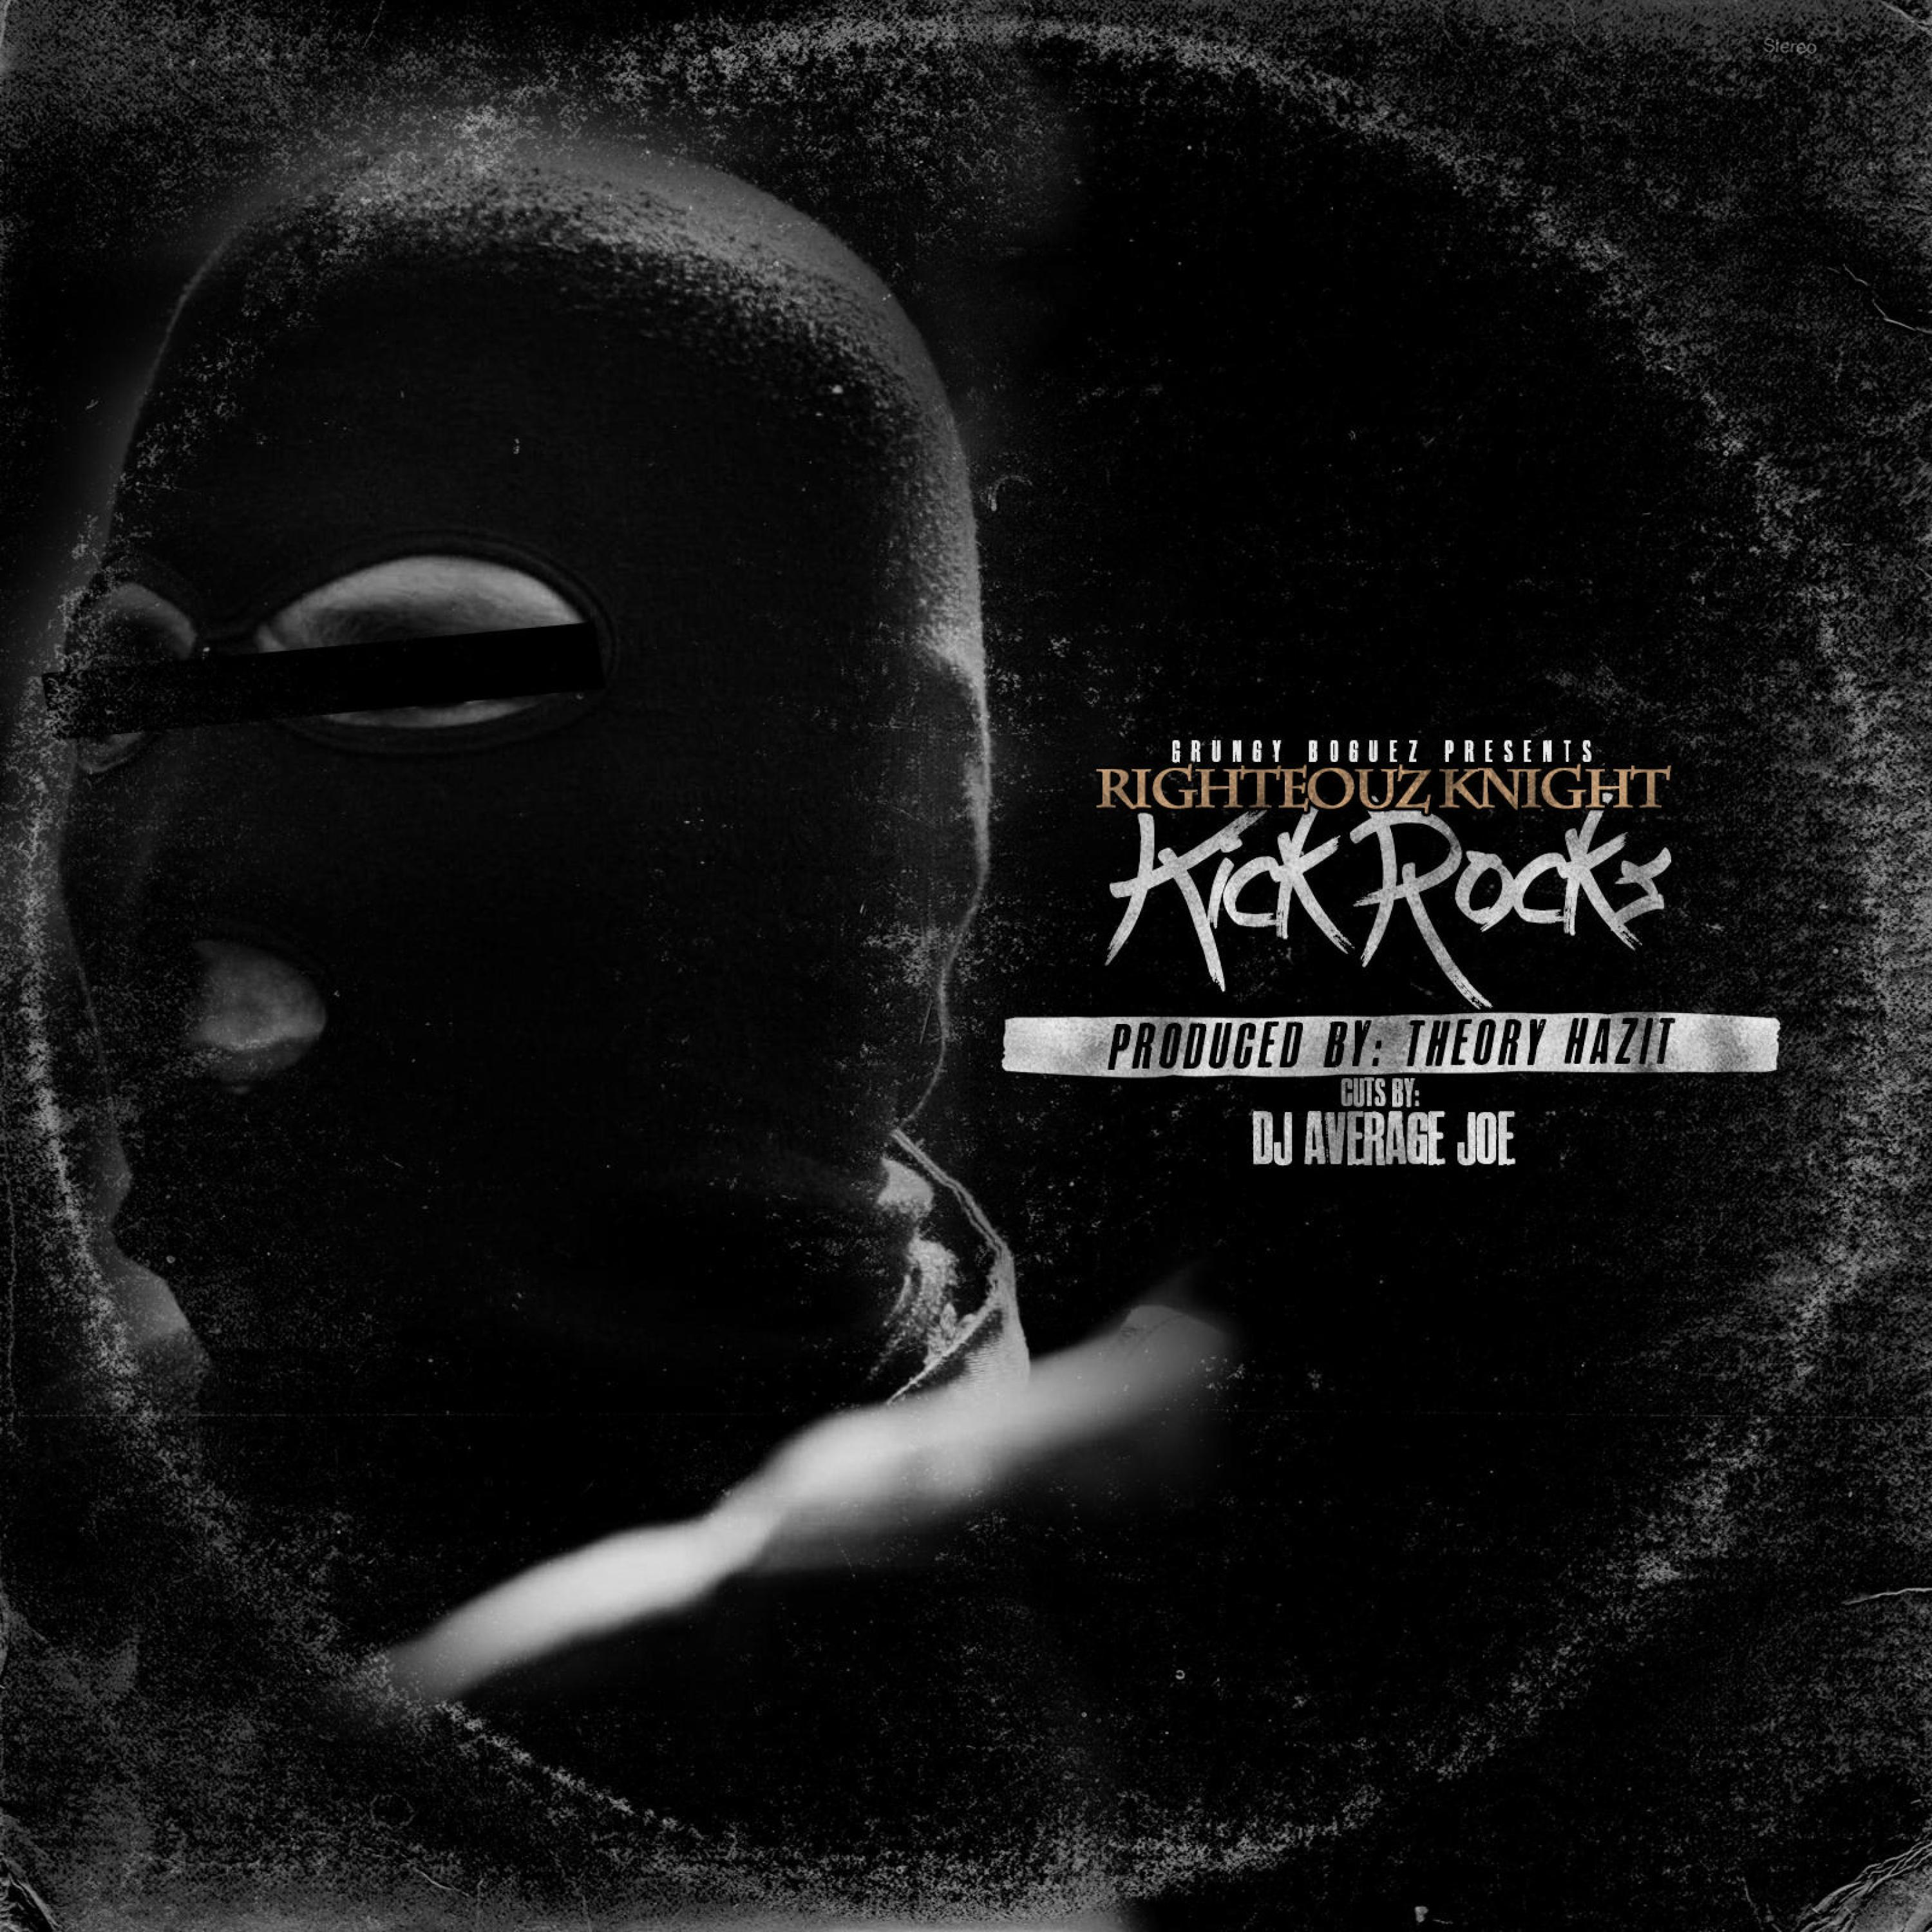 Righteouz Knight - Kick Rocks (feat. Theory Hazit & DJ Average Joe) (Instrumental)